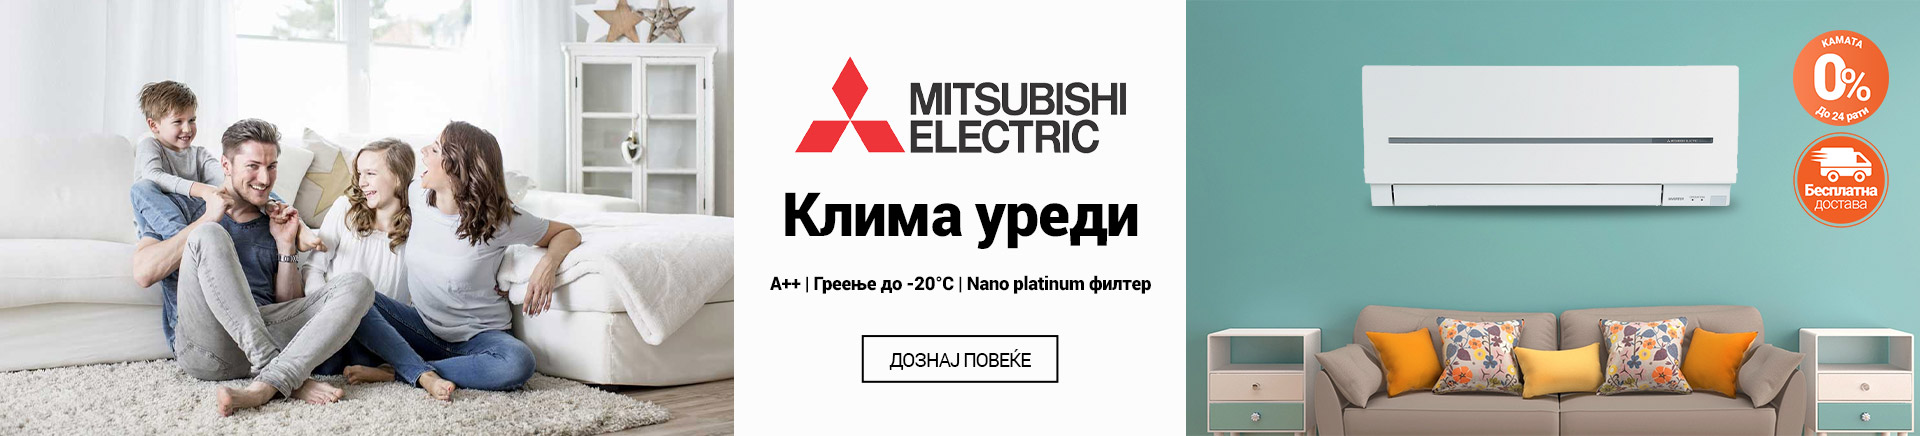 MK Mitsubishi klima MSZ-SF35VE2 MUZ-SF35VEH MOBILE 380 X 436.jpg